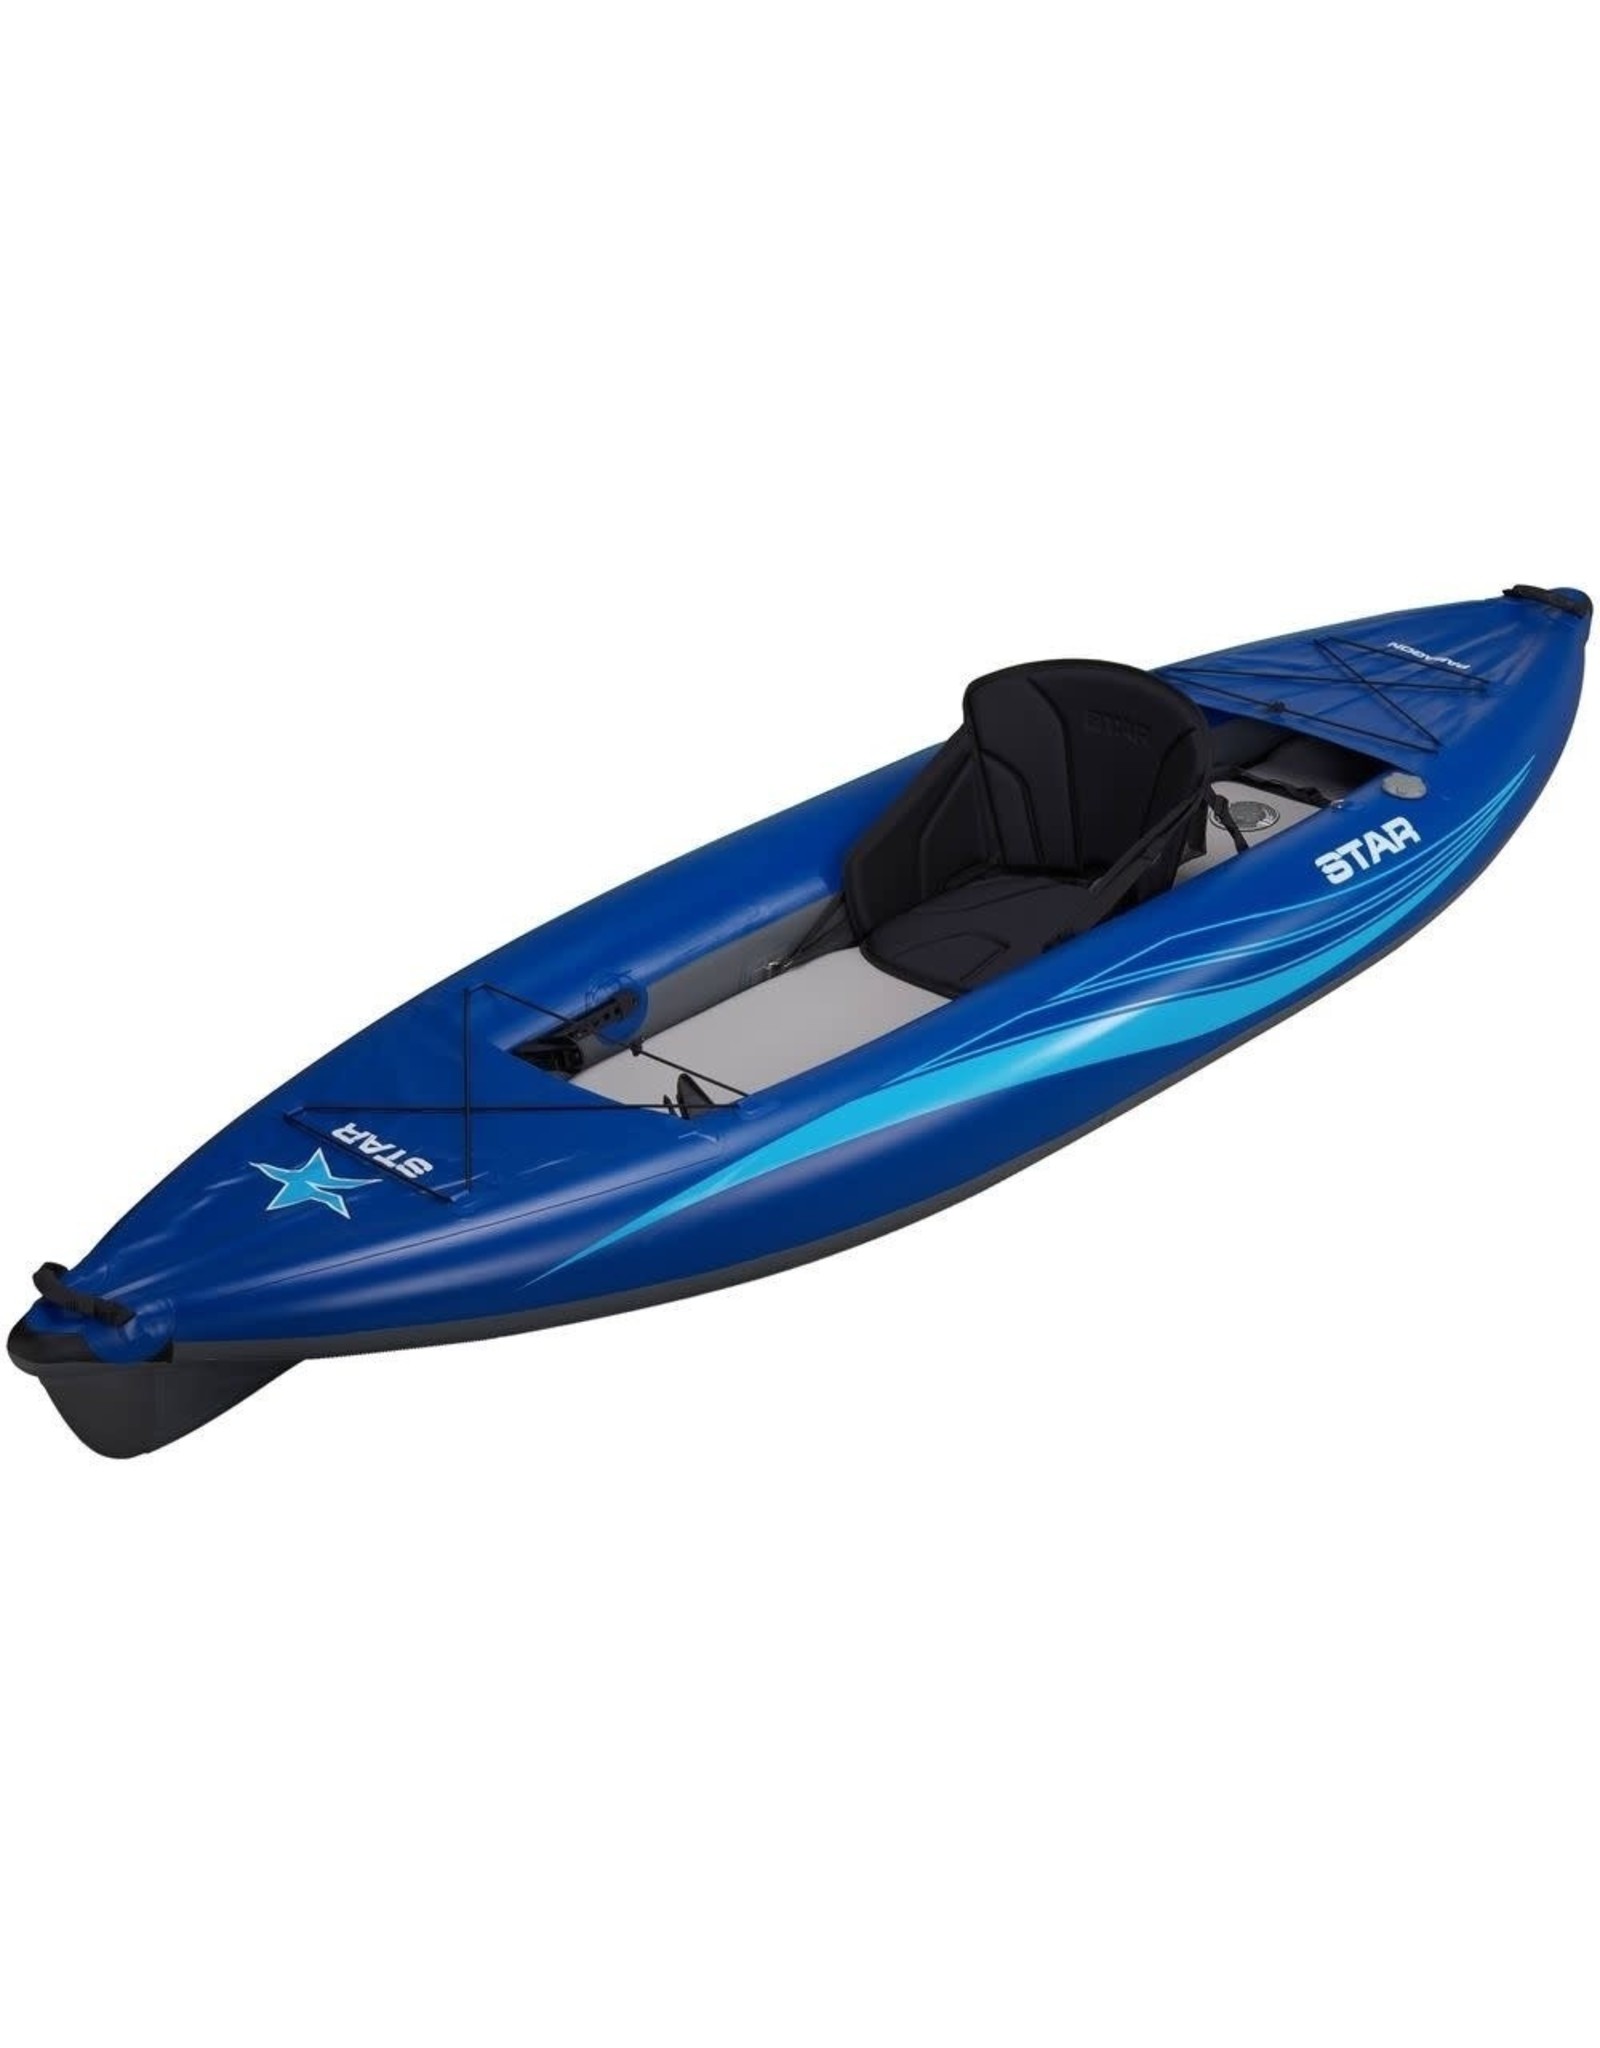 Star STAR Paragon Inflatable Kayak